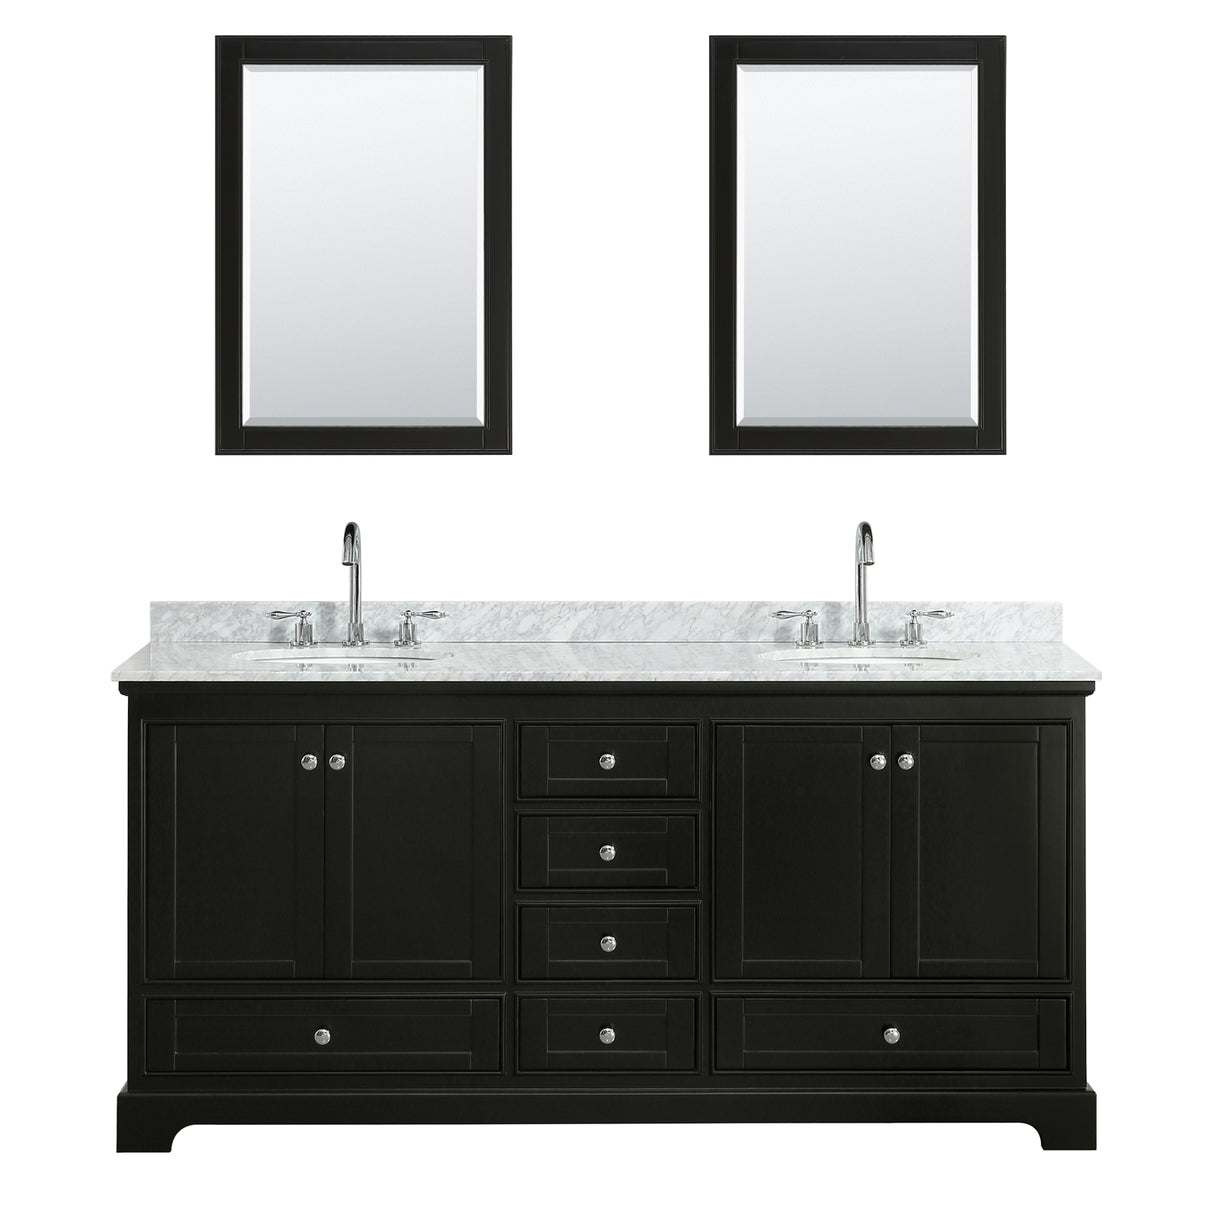 Deborah 72 Inch Double Bathroom Vanity in Dark Espresso White Carrara Marble Countertop Undermount Oval Sinks and 24 Inch Mirrors